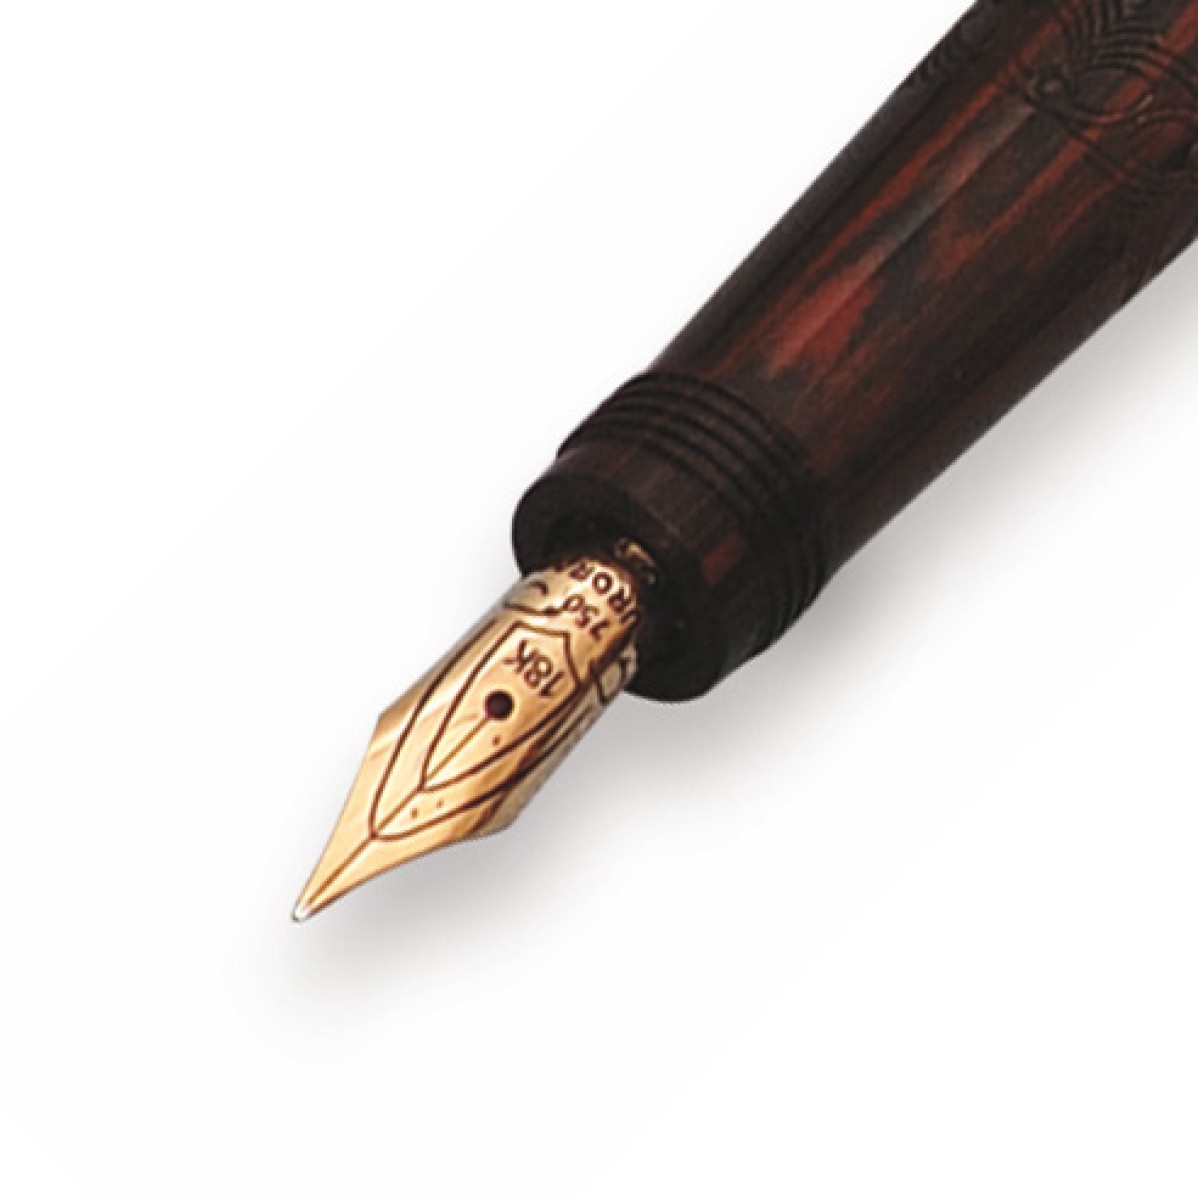 Aurora - Nobile - 18k Solid Gold Cap - Fountain Pen